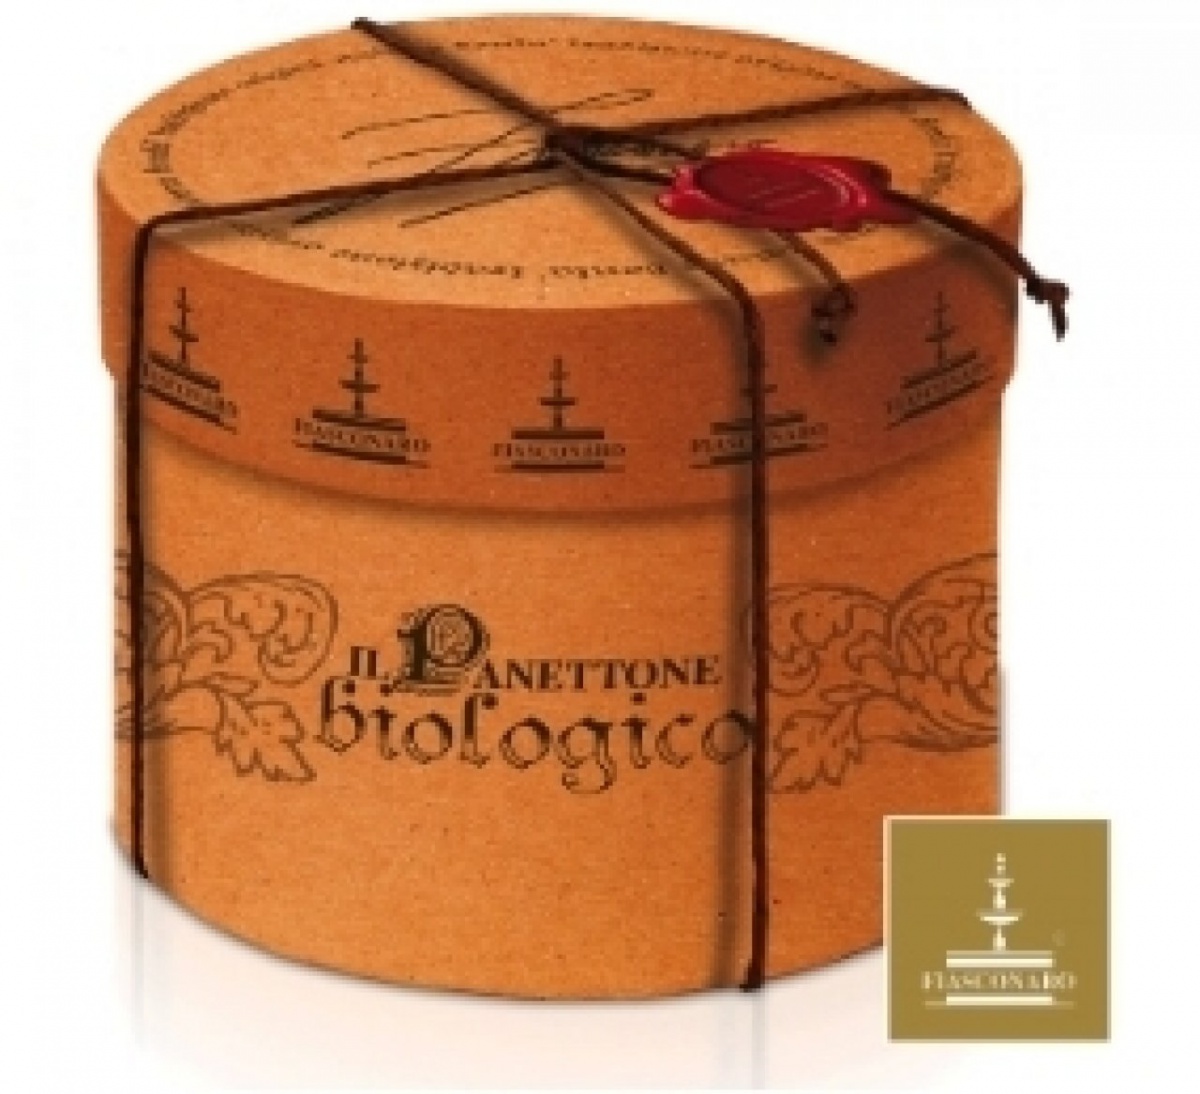 The ‘Hatbox’ Panettone